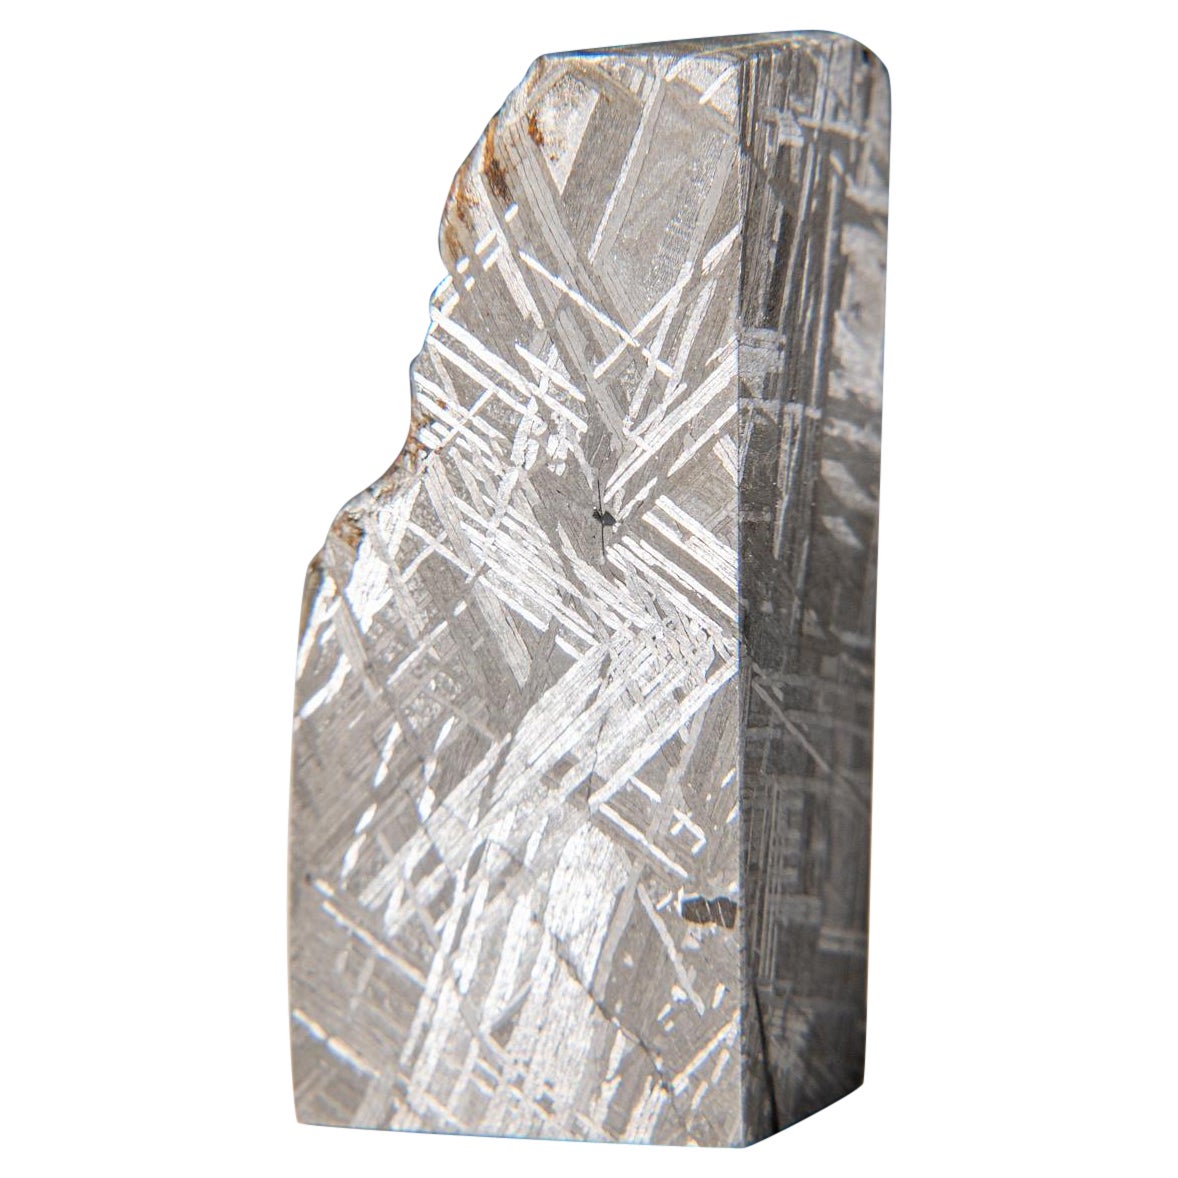 Muonionalusta Meteorit-Slice (142.9 Gramm)